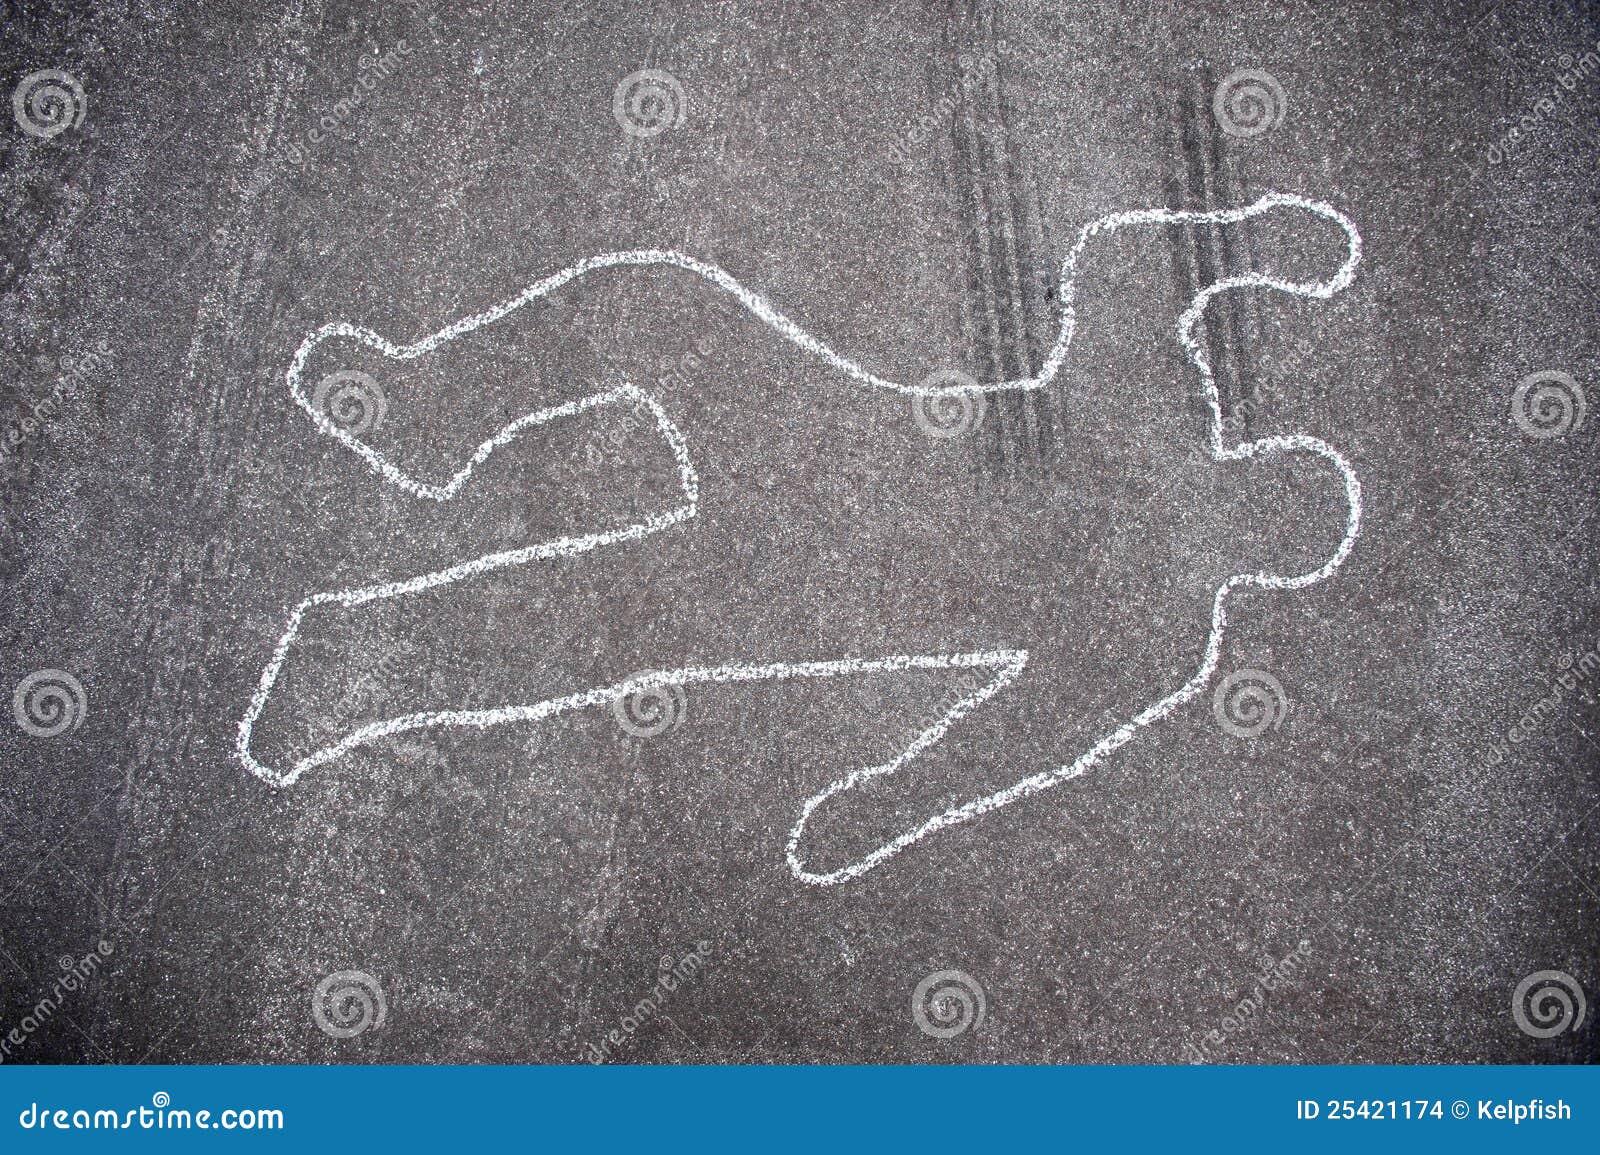 Human chalk line stock photo. Image of human, death, dead - 25421174